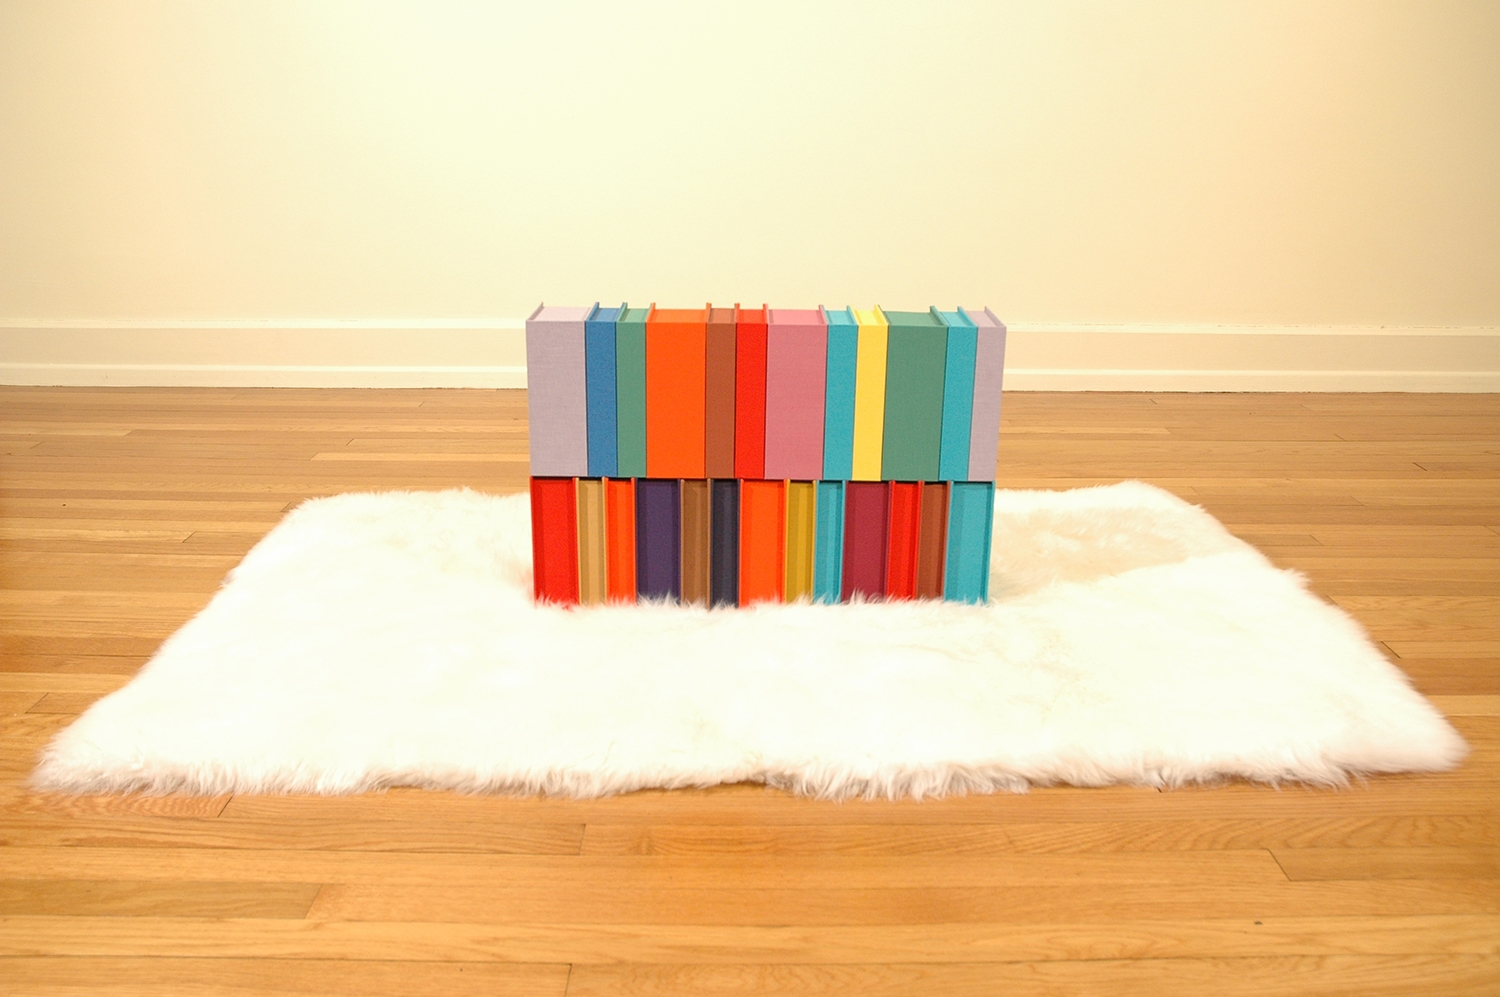  LbeOtrVayEal/AtrMahOosUinR; Bookdbinding Board, Fabric, Sheepskin Rug; 24" x 6" x 16"; 2005-06 